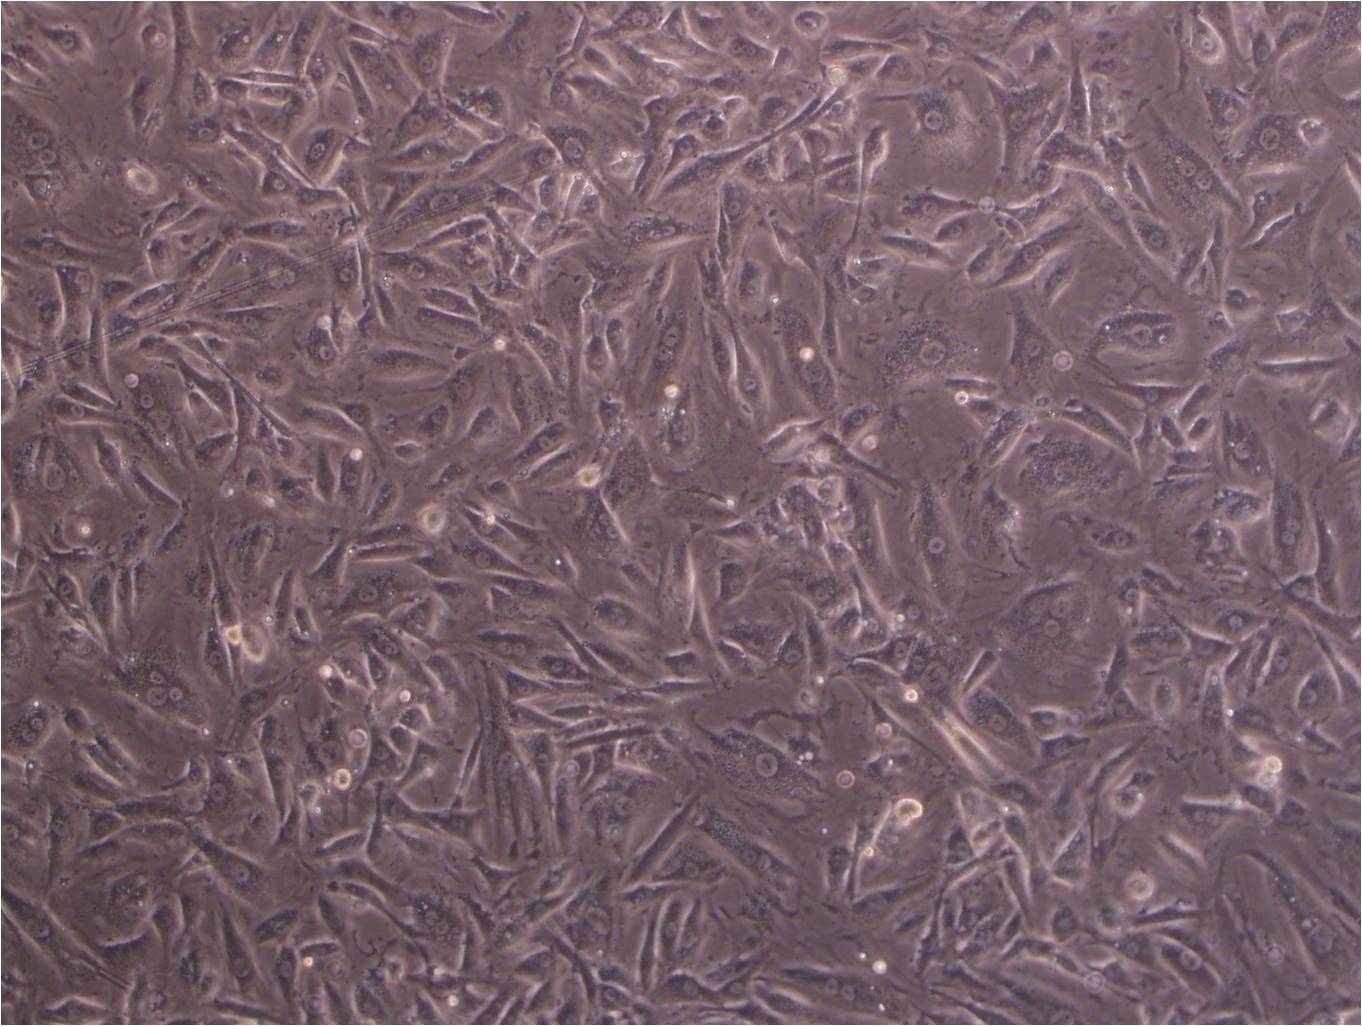 L2 epithelioid cells大鼠肺泡上皮细胞系,L2 epithelioid cells